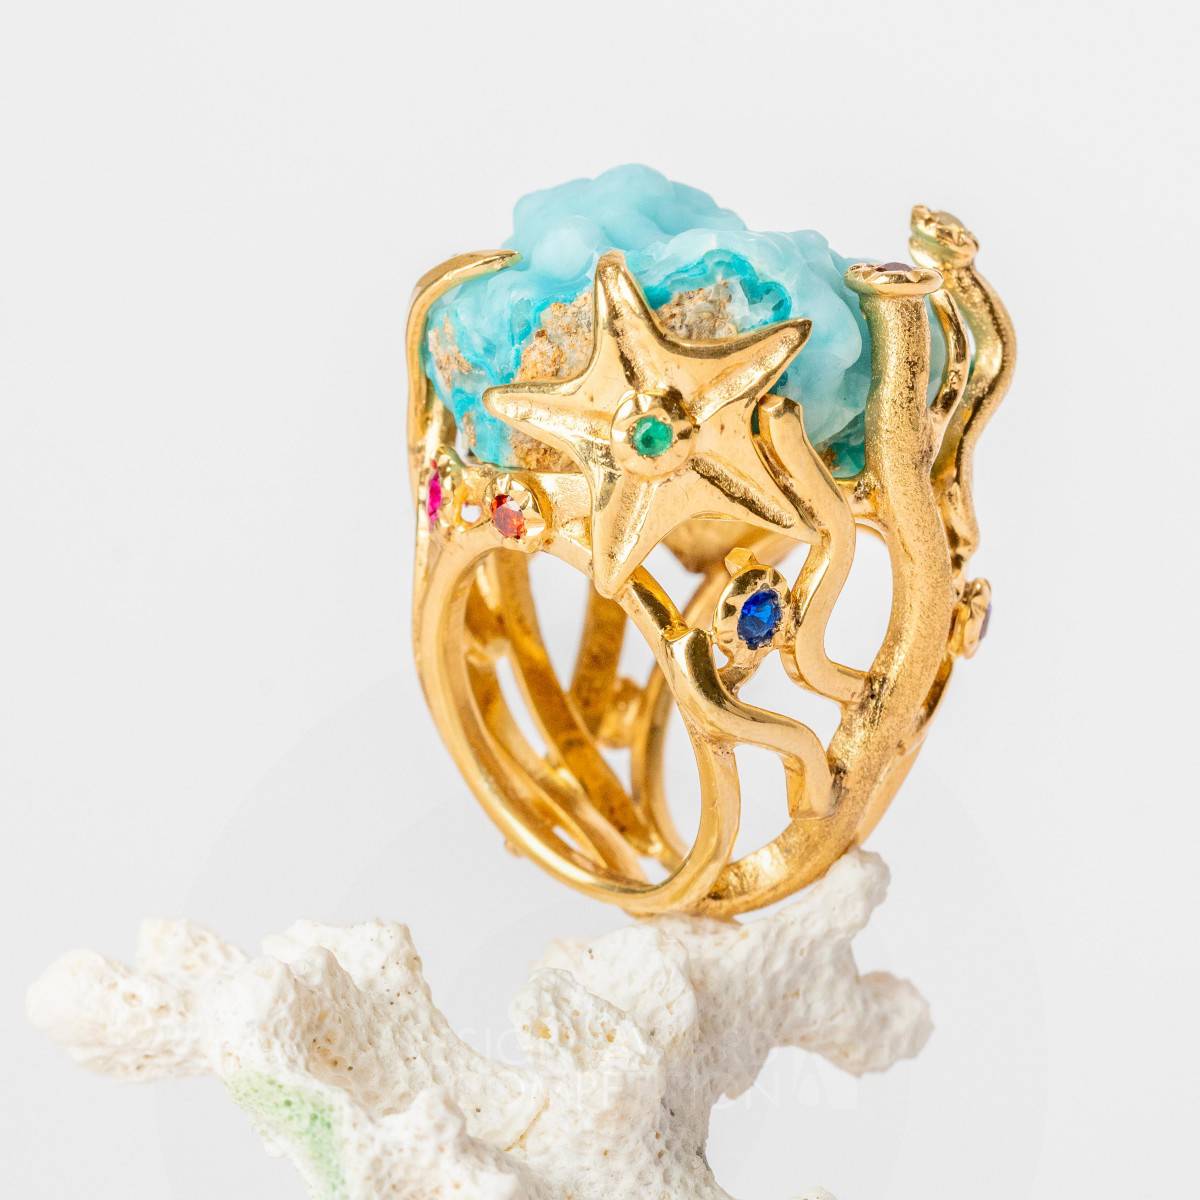 Sanda Strugar wins Bronze at the prestigious A' Jewelry Design Award with The Bottom Ring.